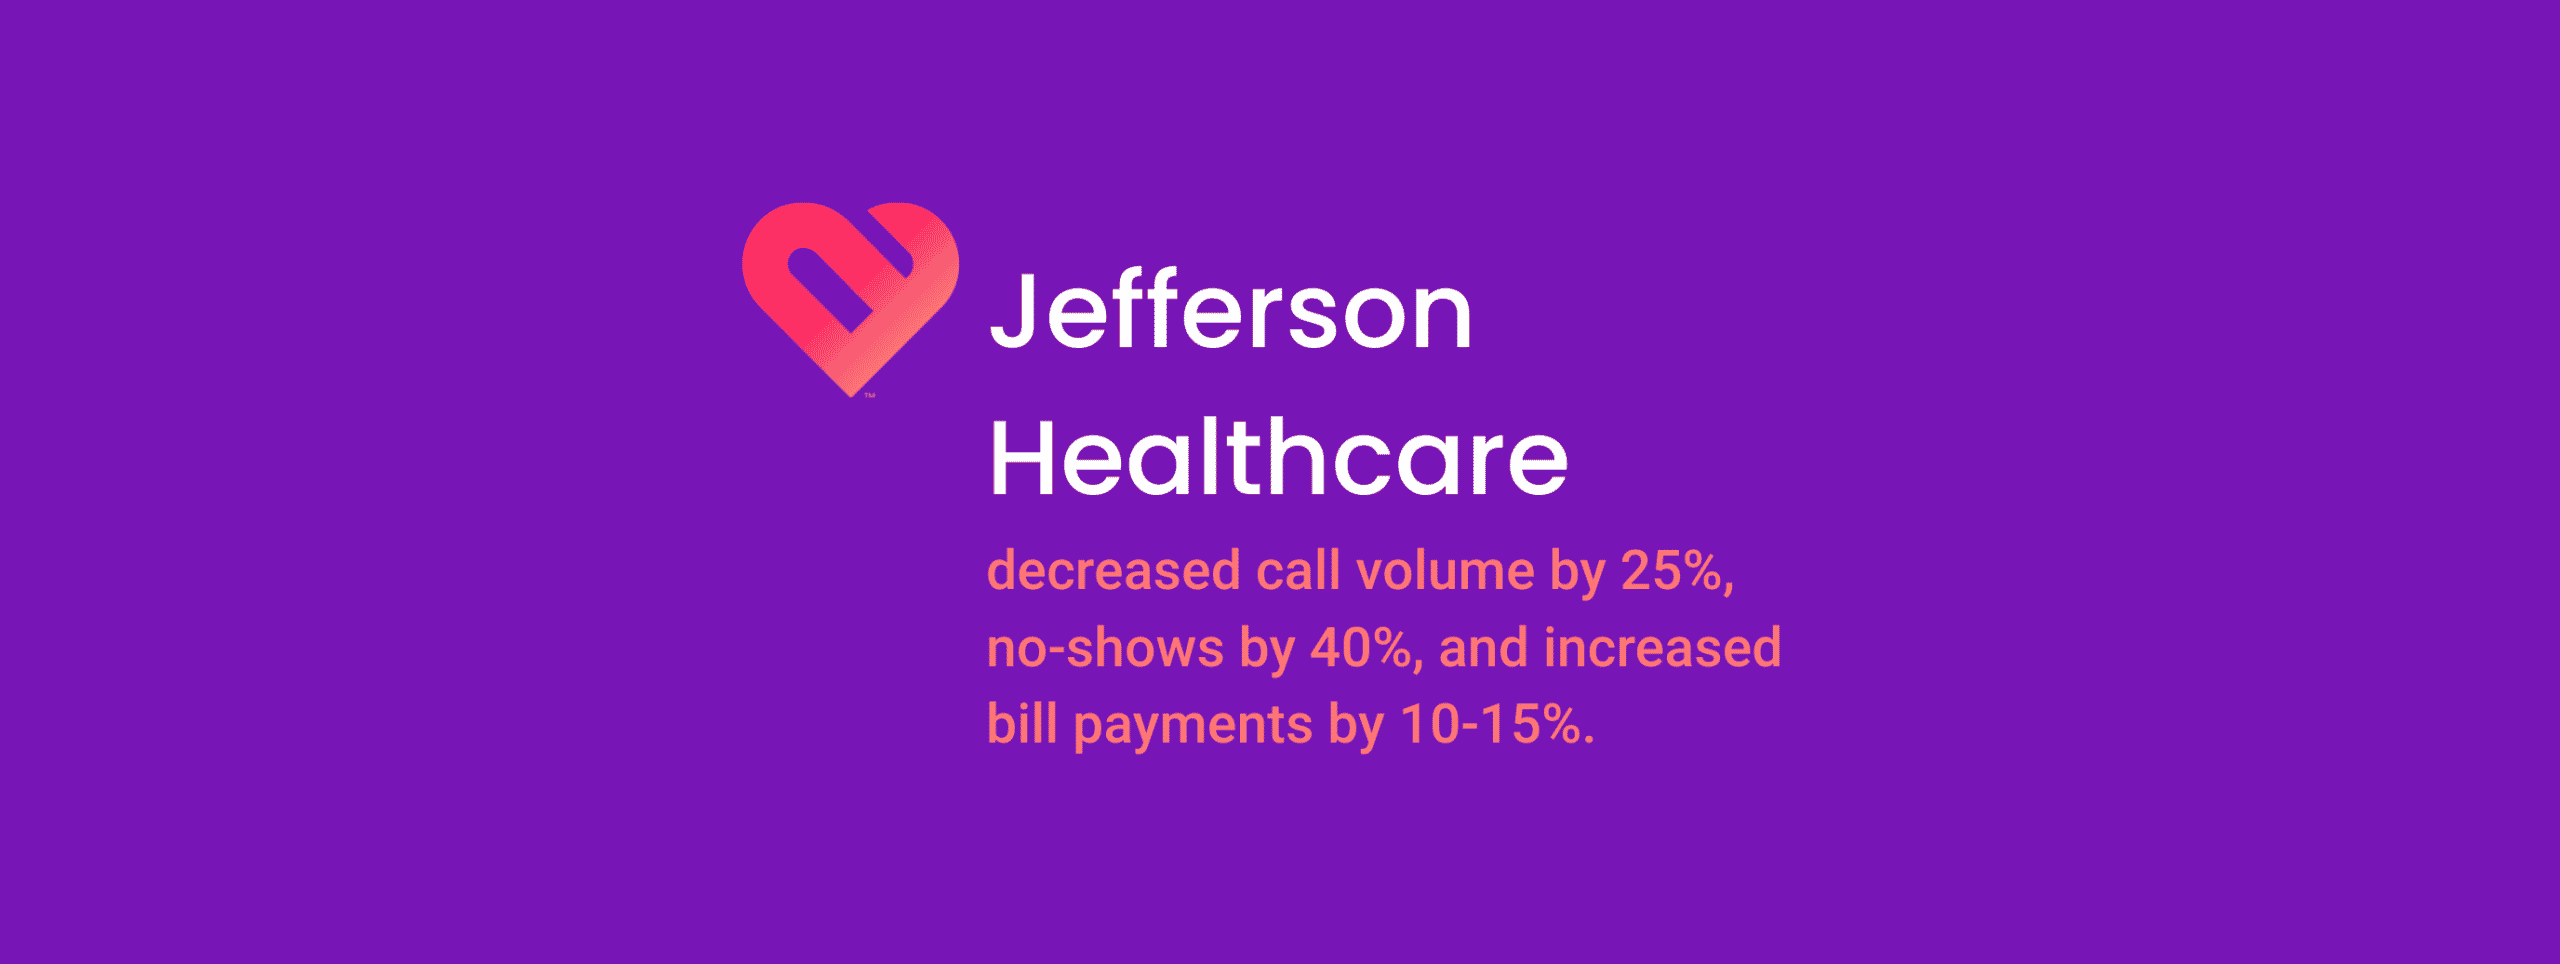 Jefferson Healthcare header